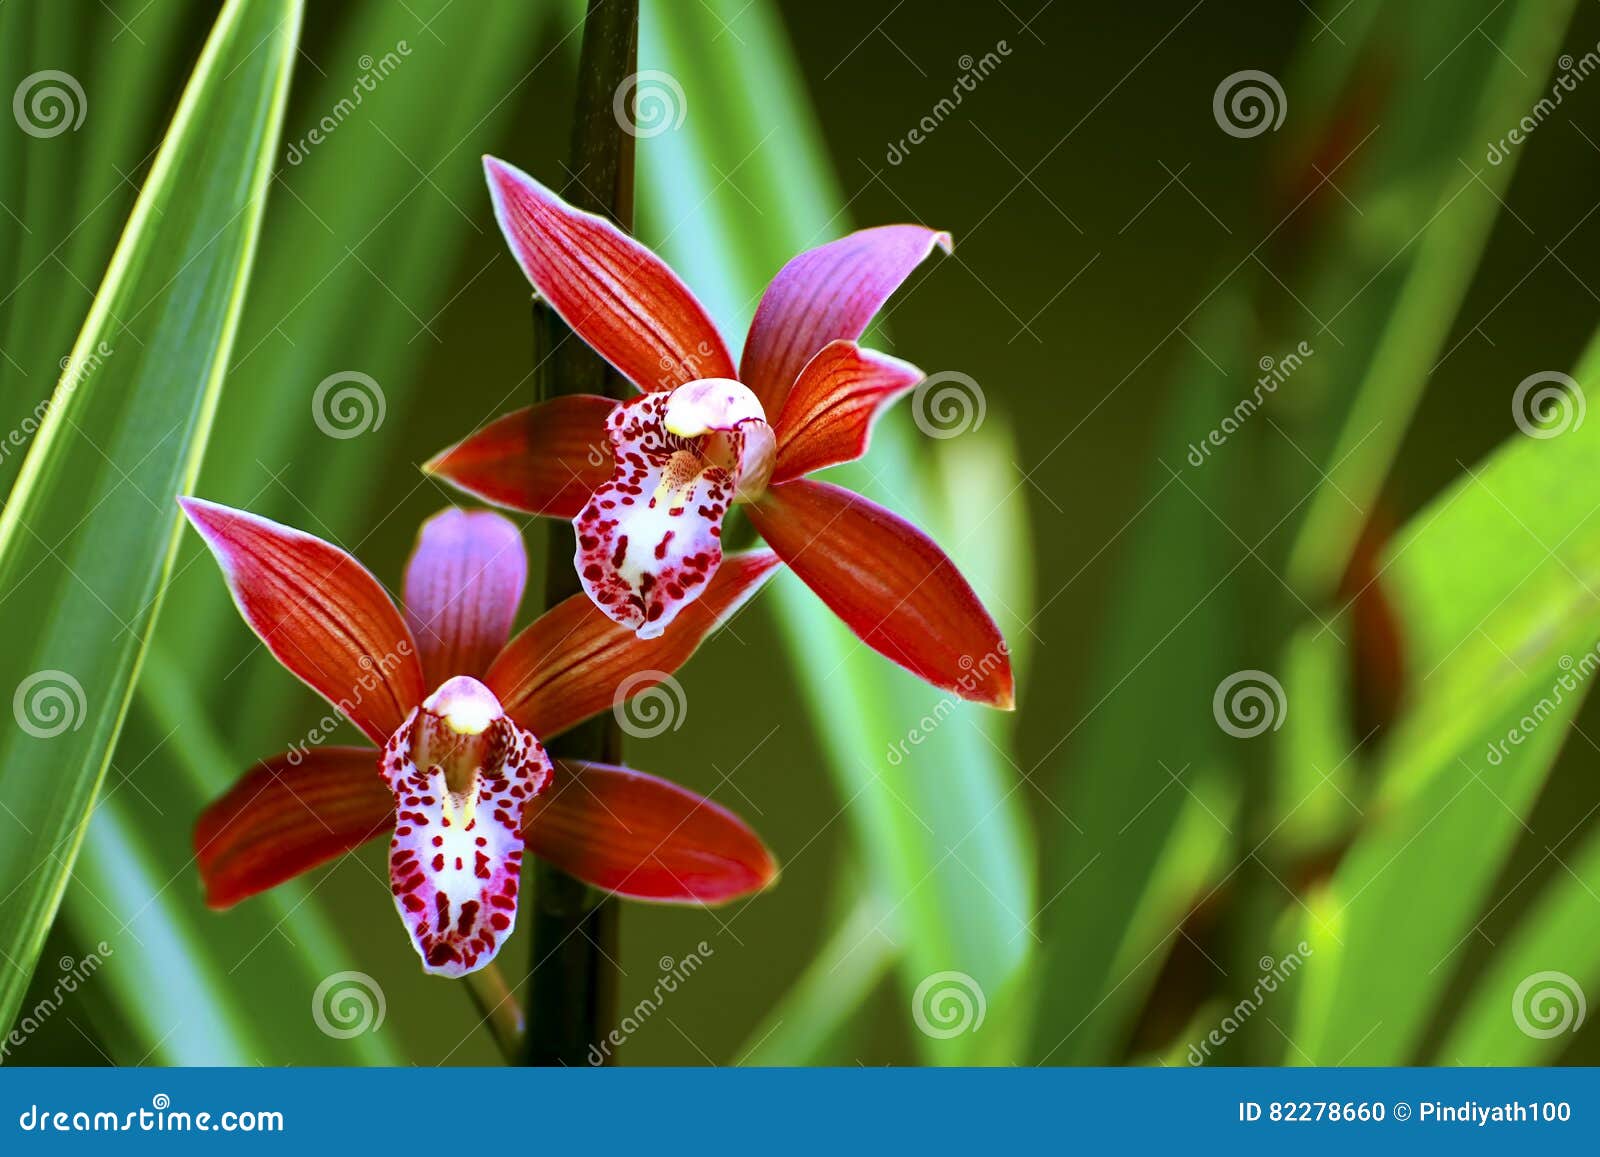 Cymbidium hybrid orchids stock photo. Image of cymbidium - 82278660